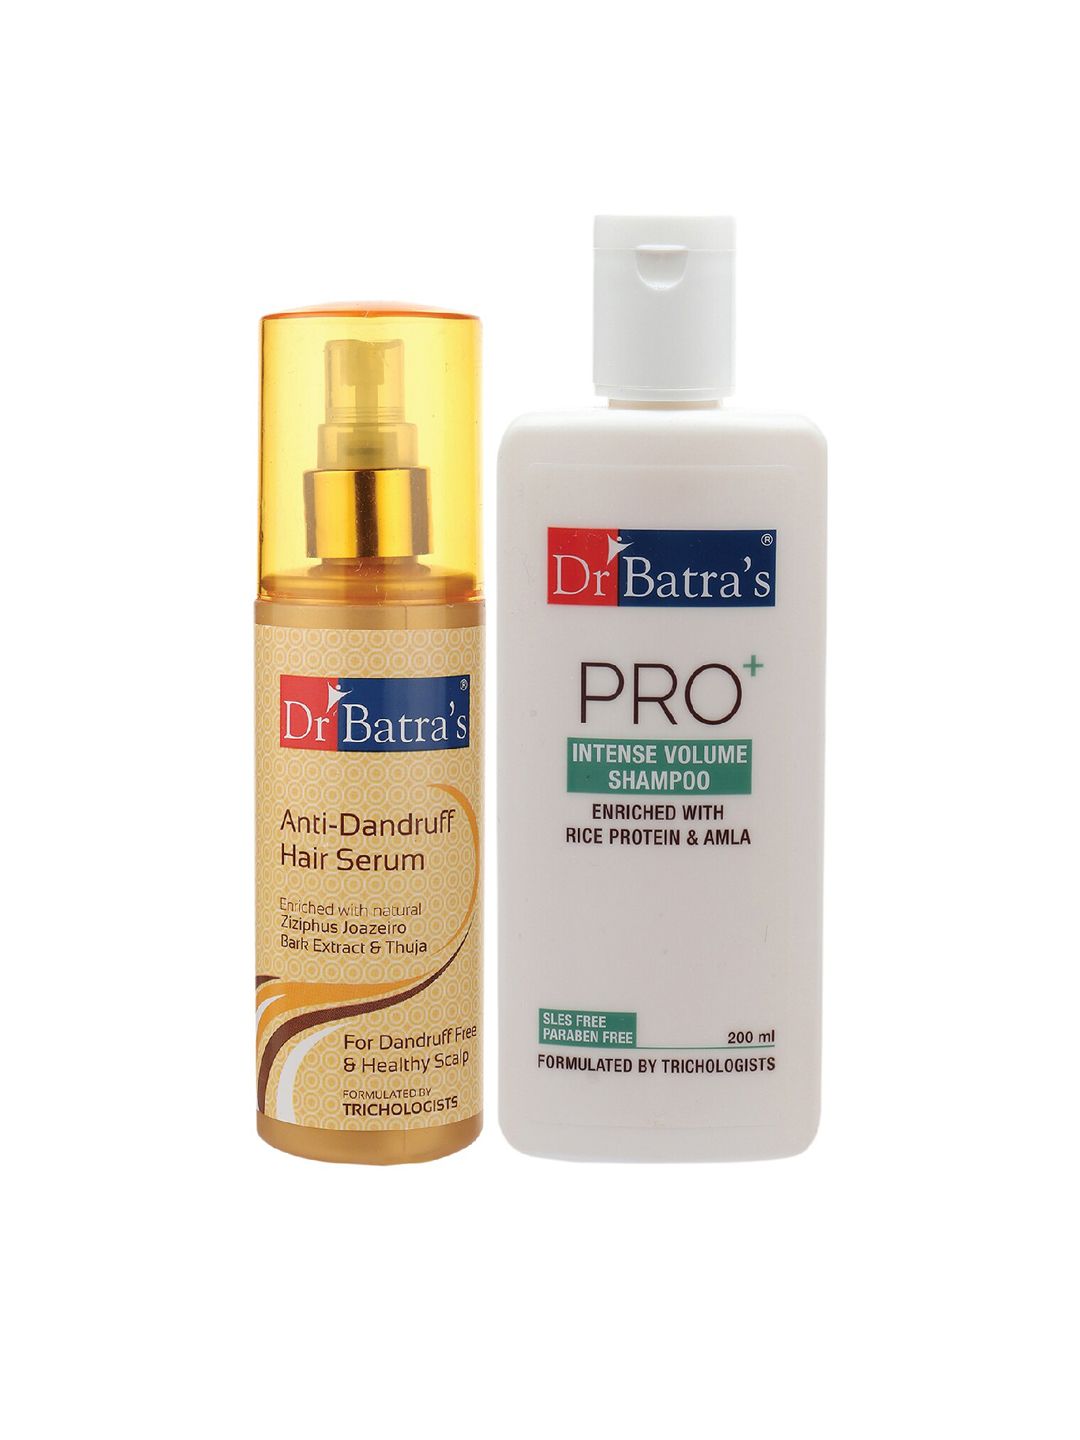 Dr Batra's Anti Dandruff Hair Serum & Pro+ Intense Volume Shampoo Price in India